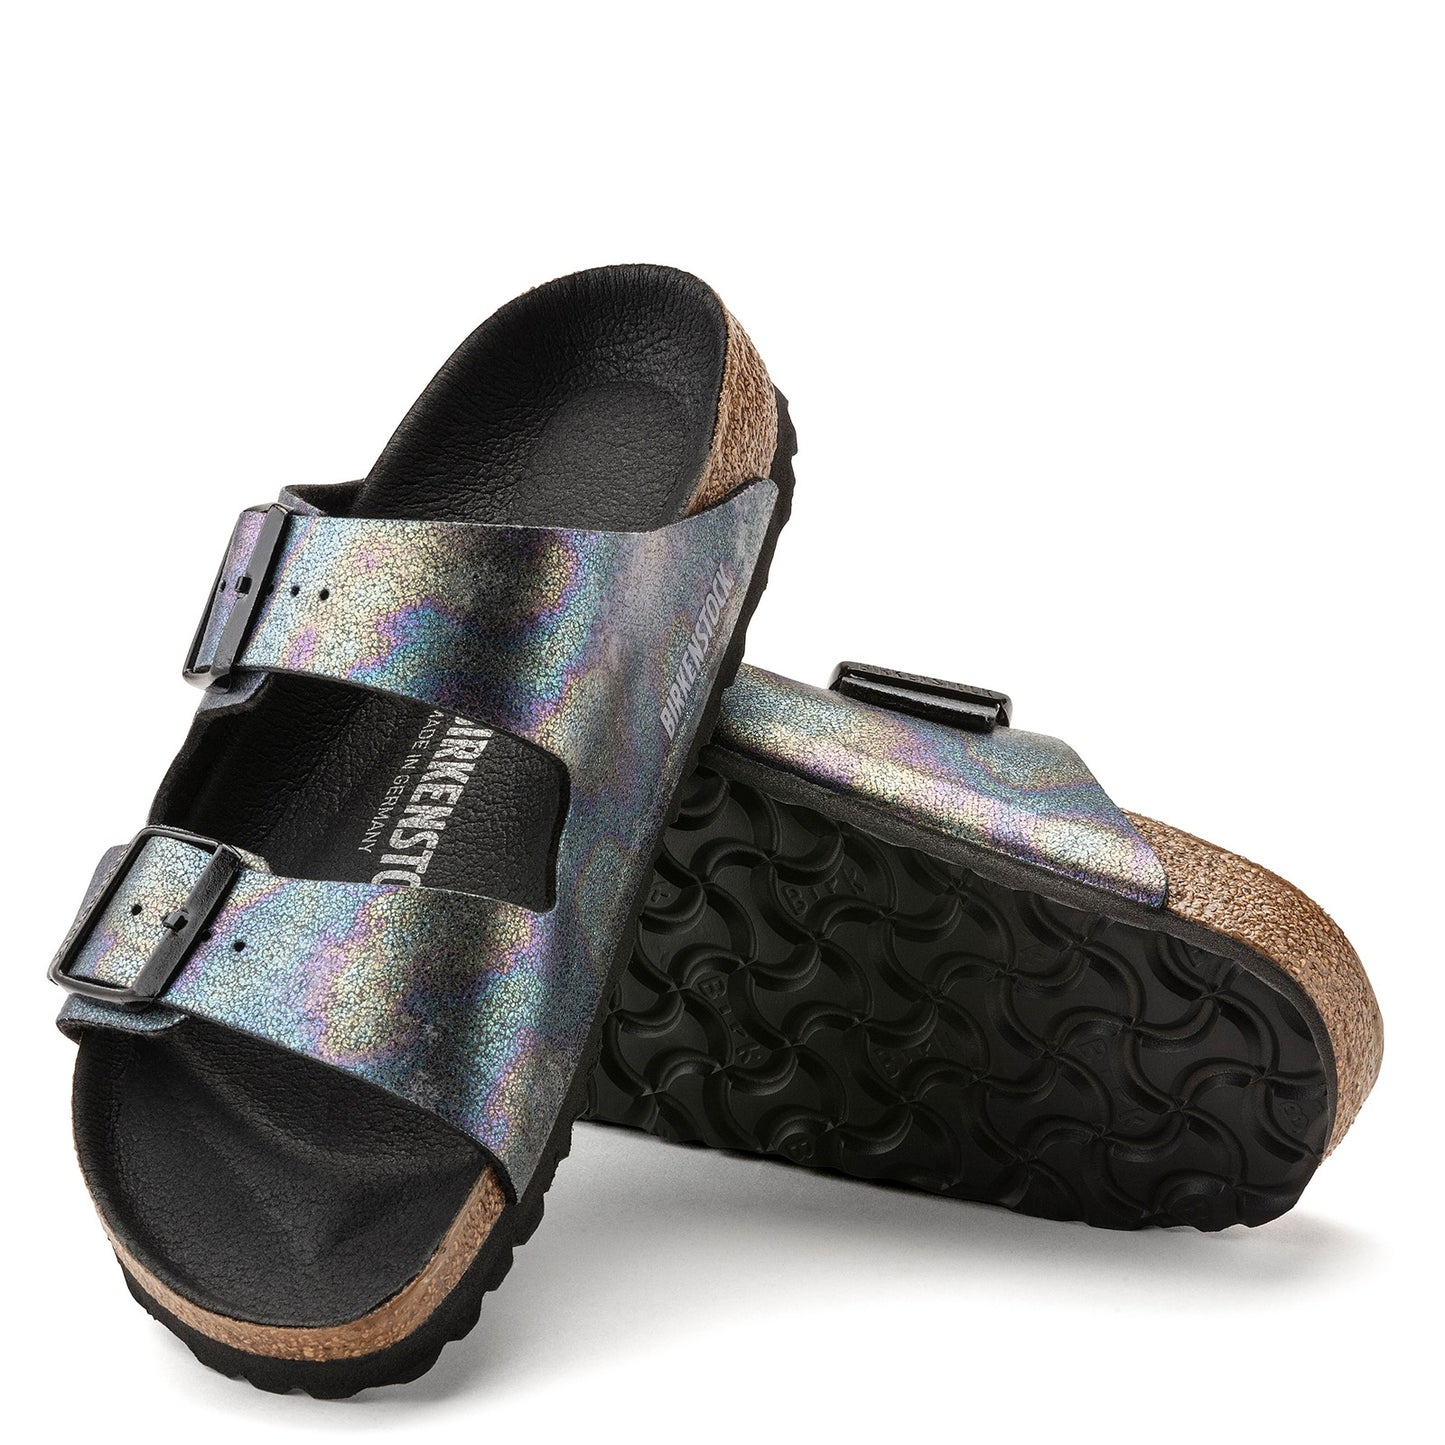 Peltz Shoes  Women's Birkenstock Arizona Vegan Slide Sandal - Narrow Width BLACK IRIDESCENT 1021 251 N